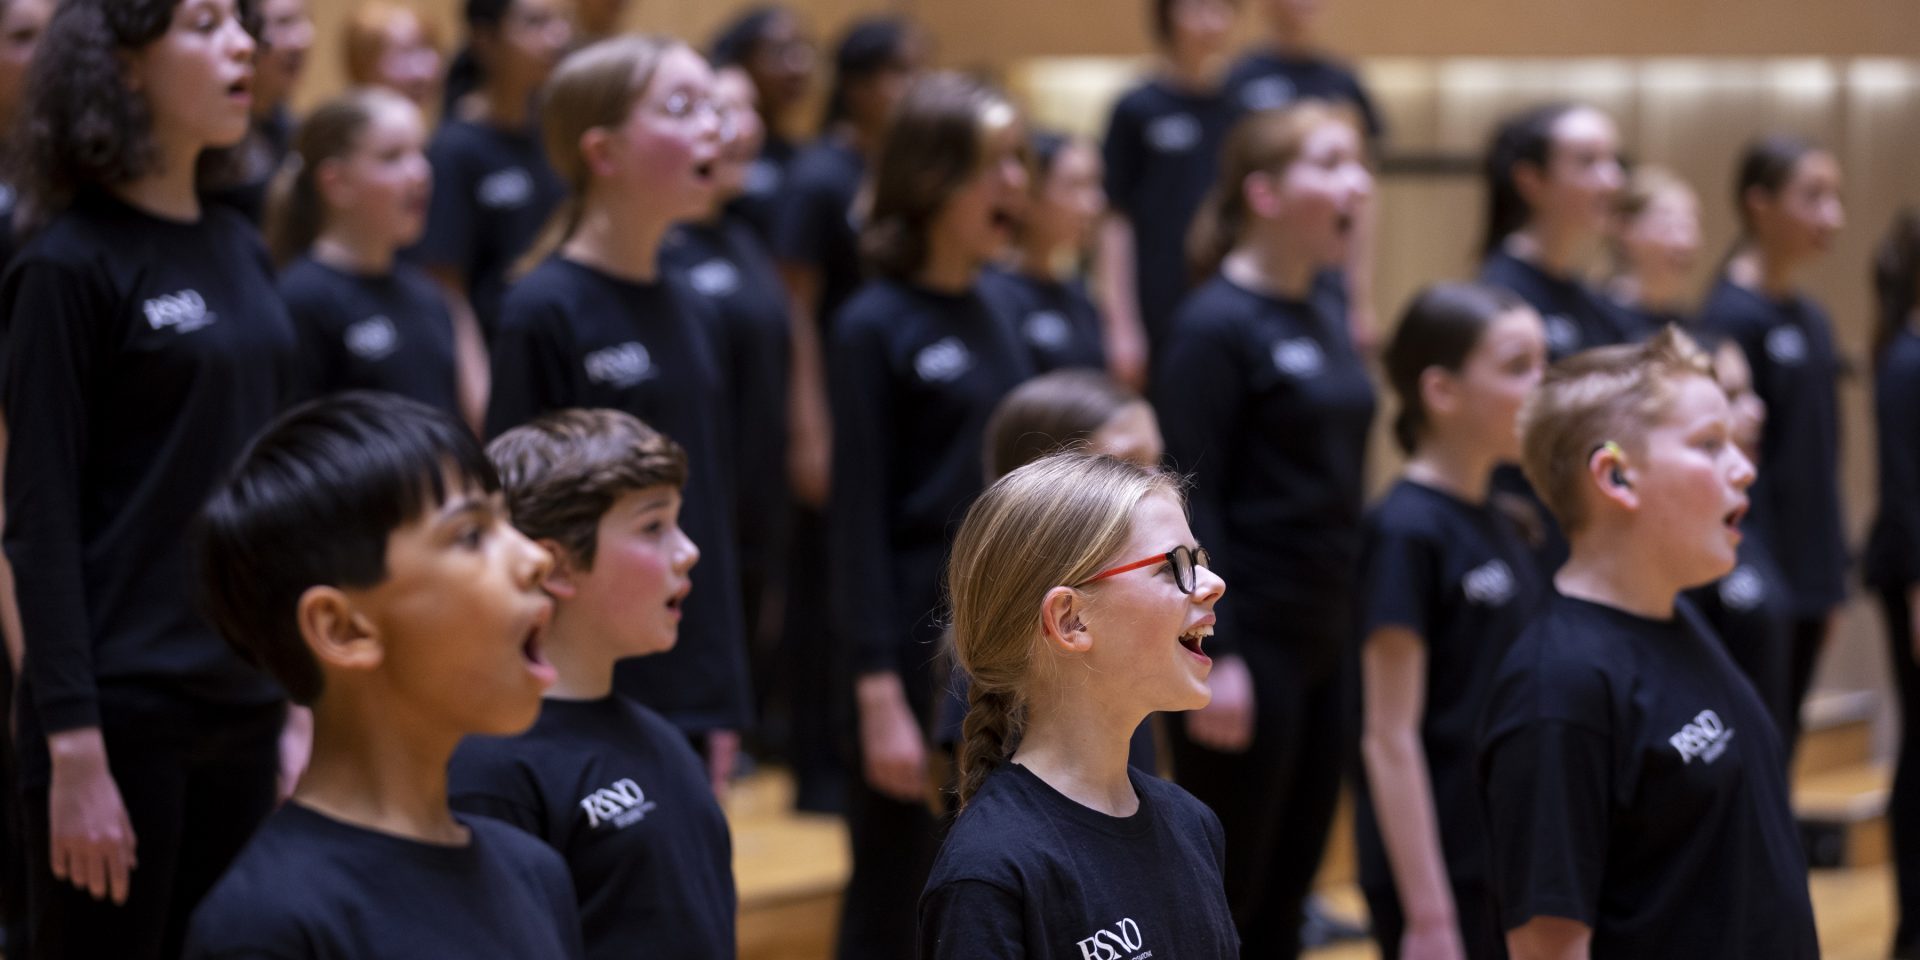 RSNO Junior Chorus Training Choir: End of Season Presentation